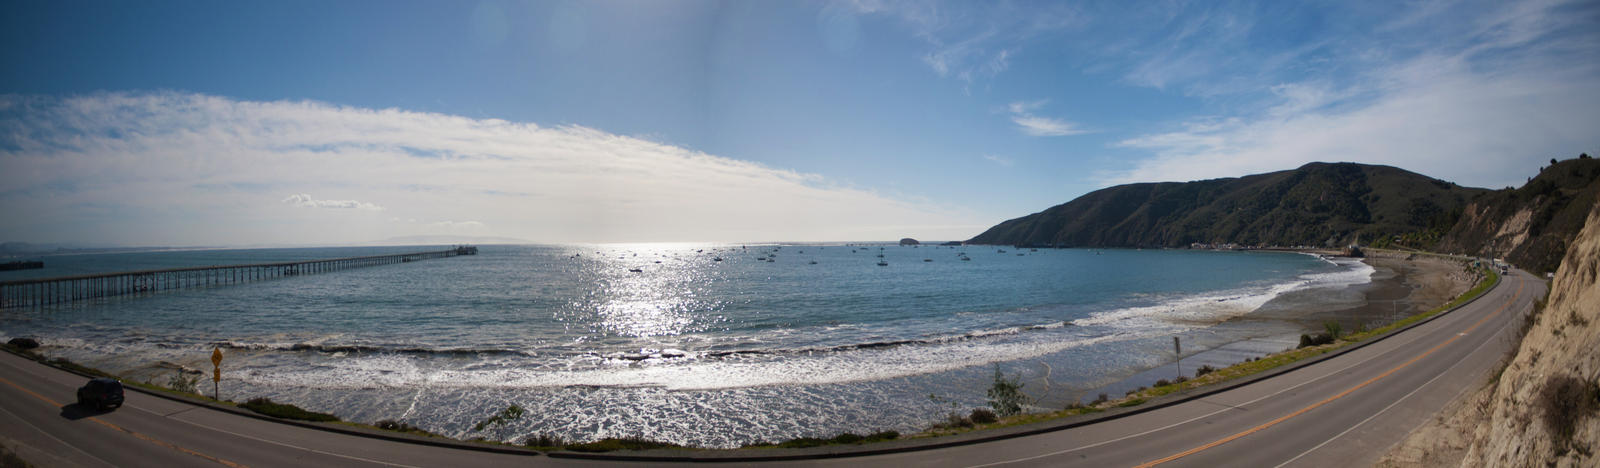 Avila Beach - panorama